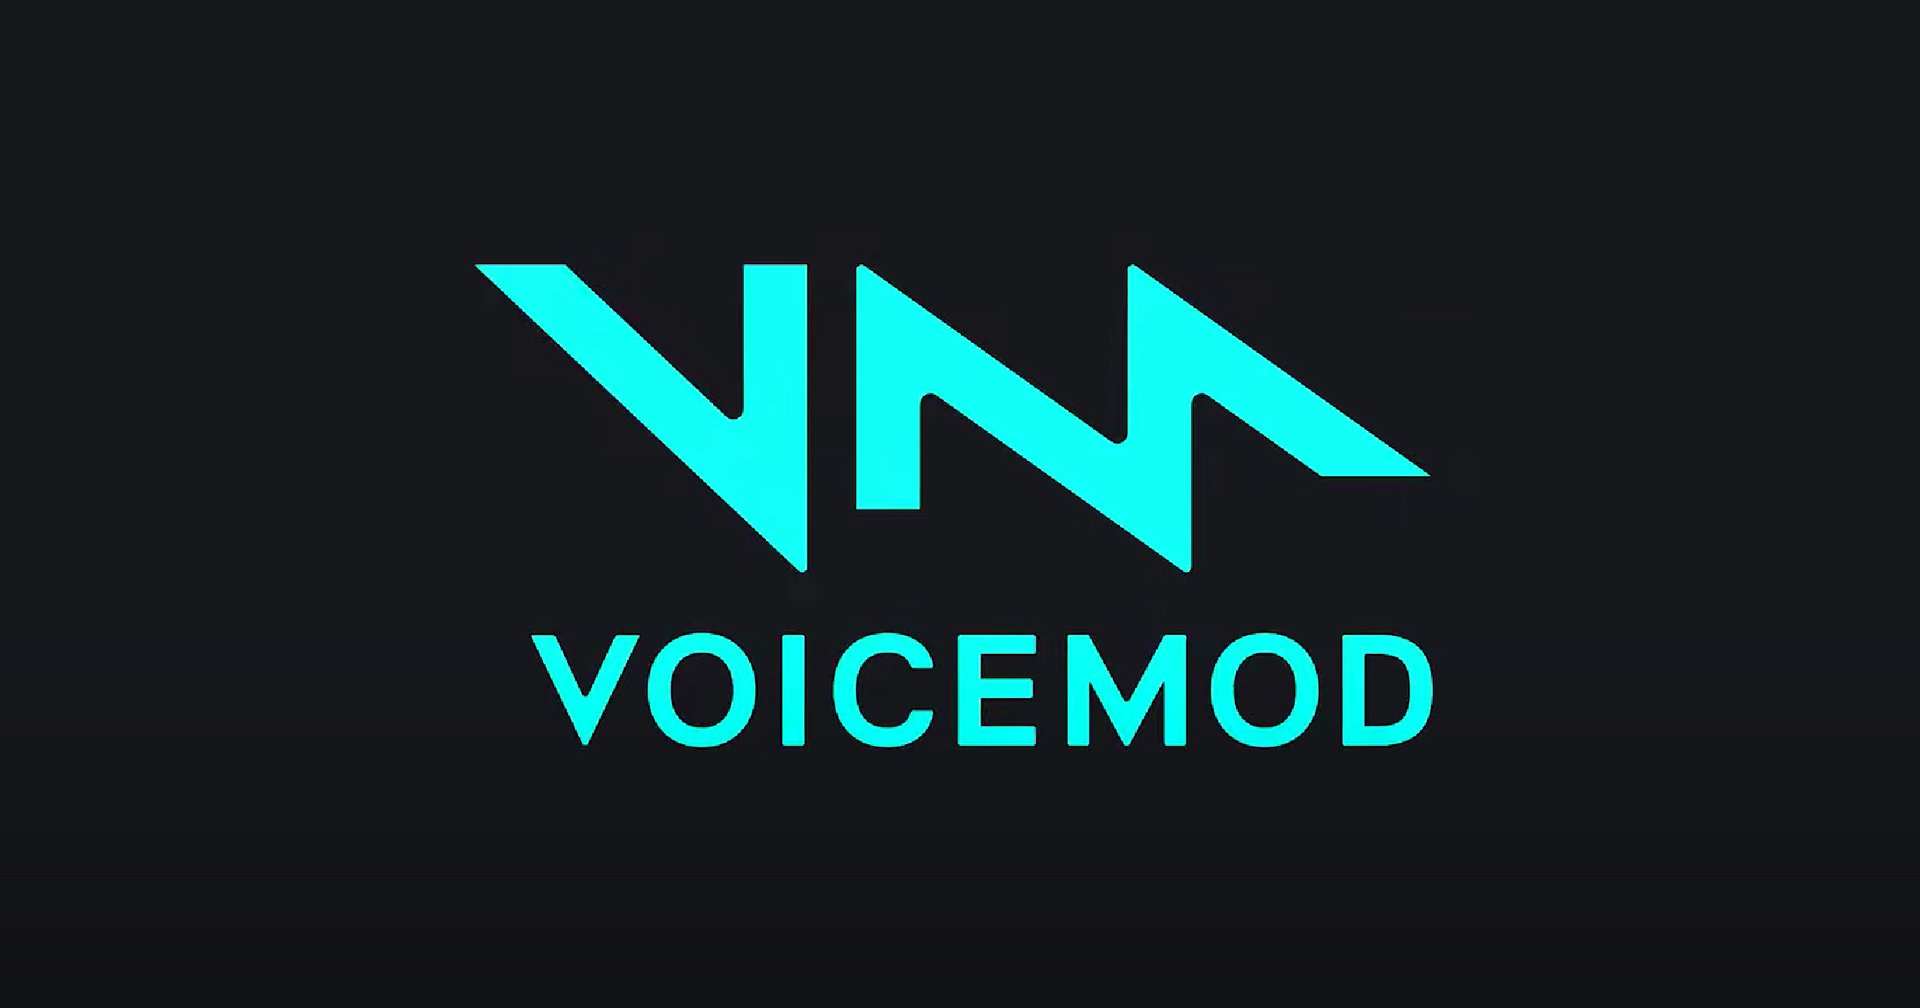 Voicemod โปรแกรมเปลี่ยนเสียงขับเคลื่อนด้วย AI ตอนนี้พร้อมใช้งานบน Mac แล้ว!